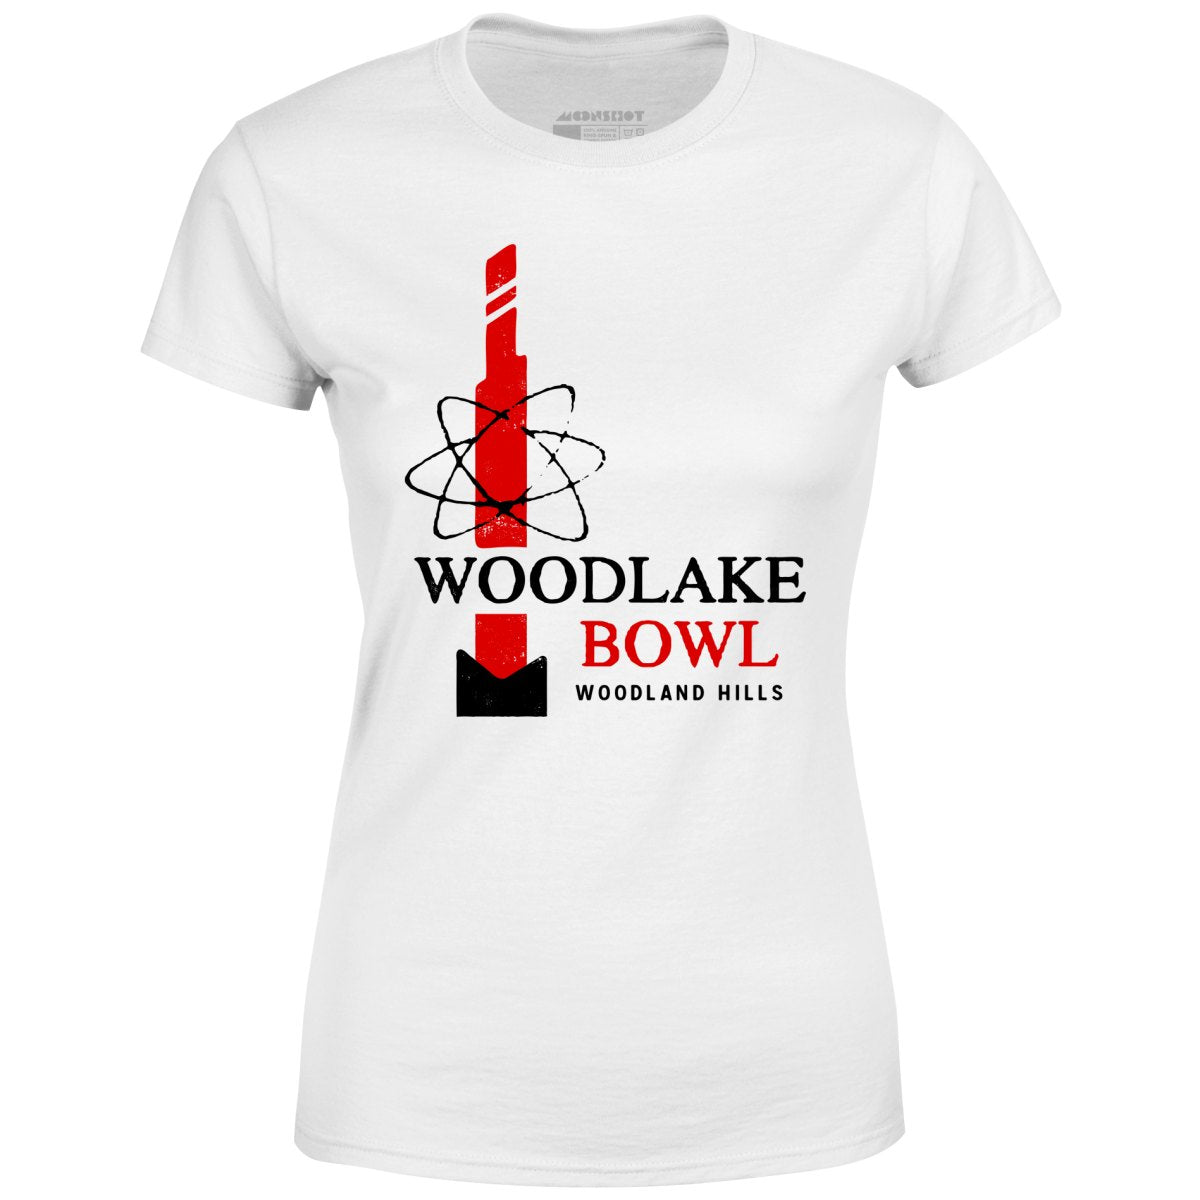 Woodlake Bowl - Woodland Hills, CA - Vintage Bowling Alley - Women's T-Shirt